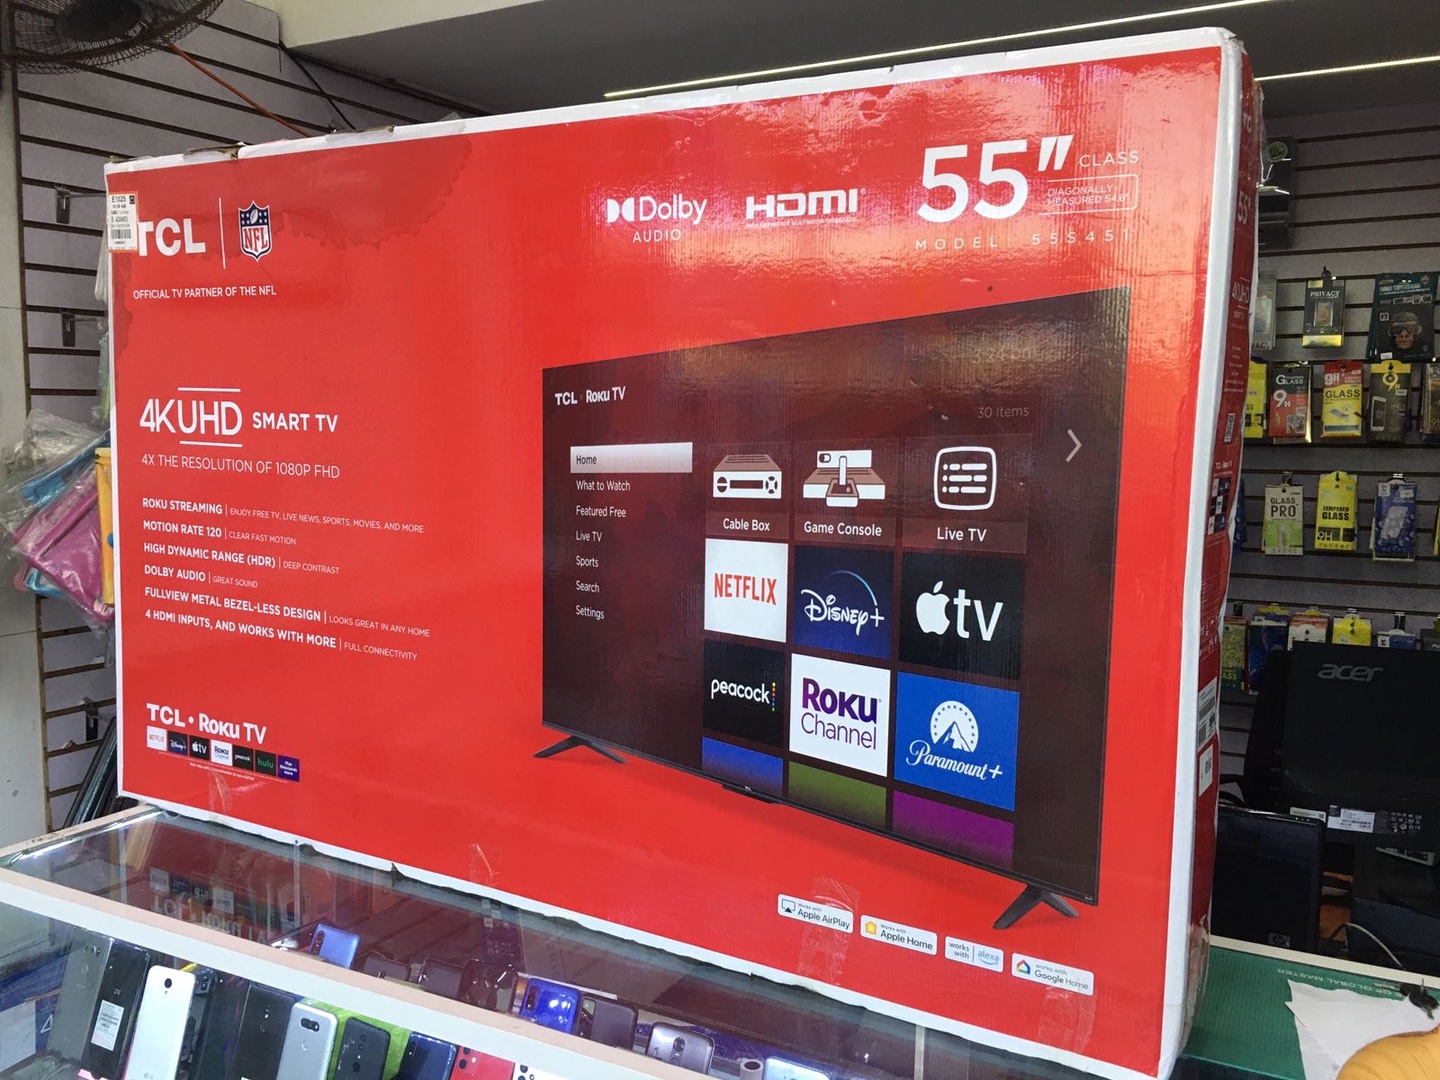 tv - TCL 55" Class S Class 4K UHD HDR LED Smart TV with Google TV - 55S450G

Nueva 